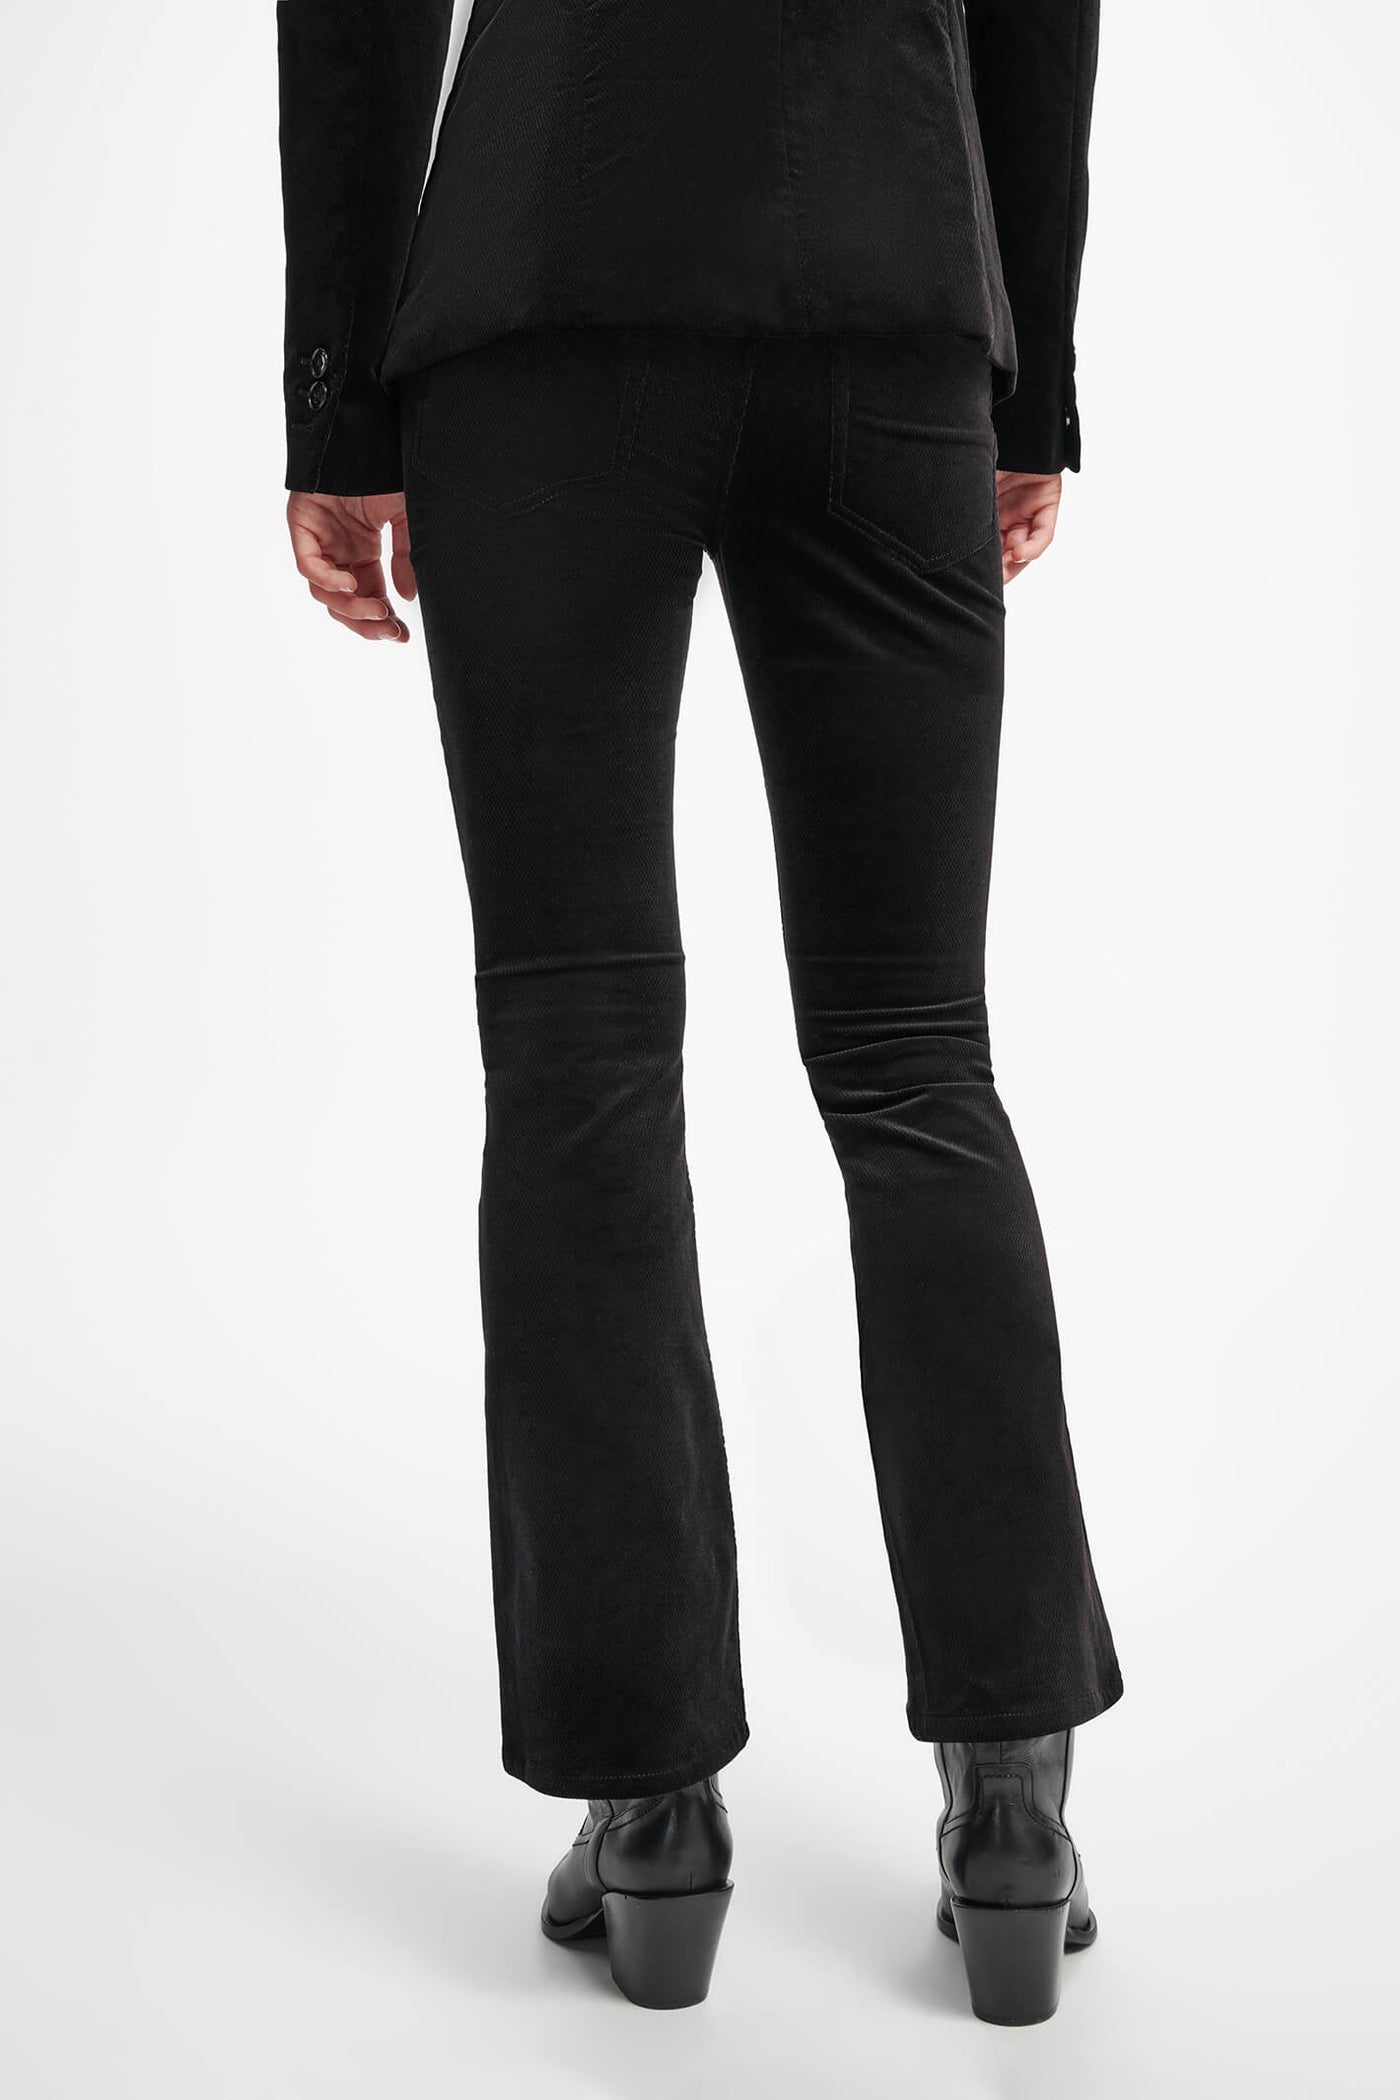 Dorothee Schumacher 848303 Twisted Structure Black Velvet Trousers - Lonah Boutique